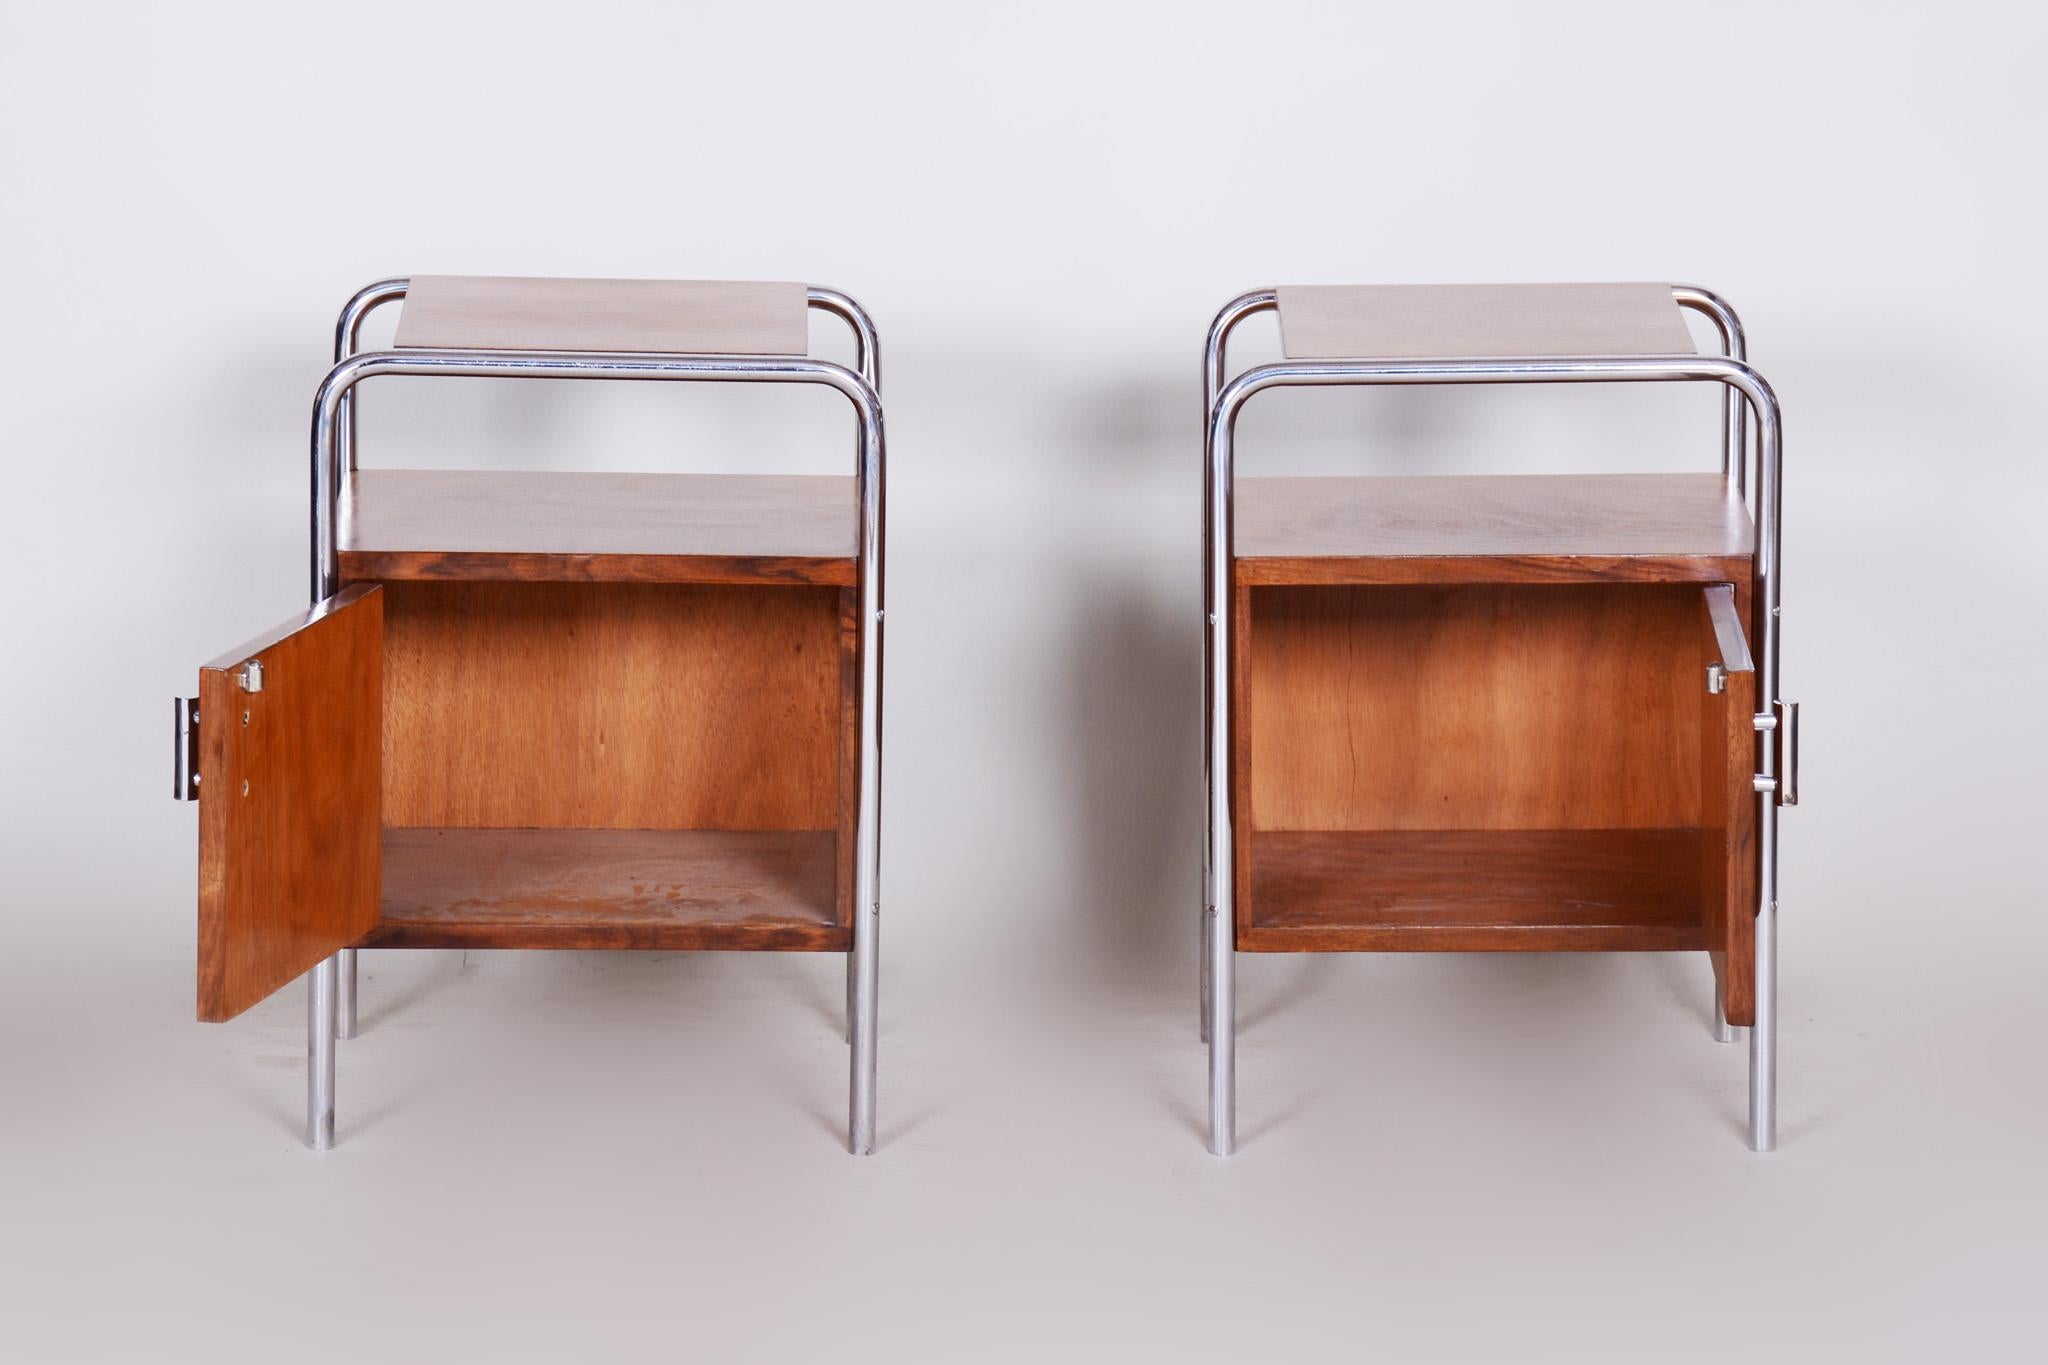 20th Century Pair of Macassar Bauhaus Bed-Side Tables by Robert Slezak, Czechoslovakia, 1930s